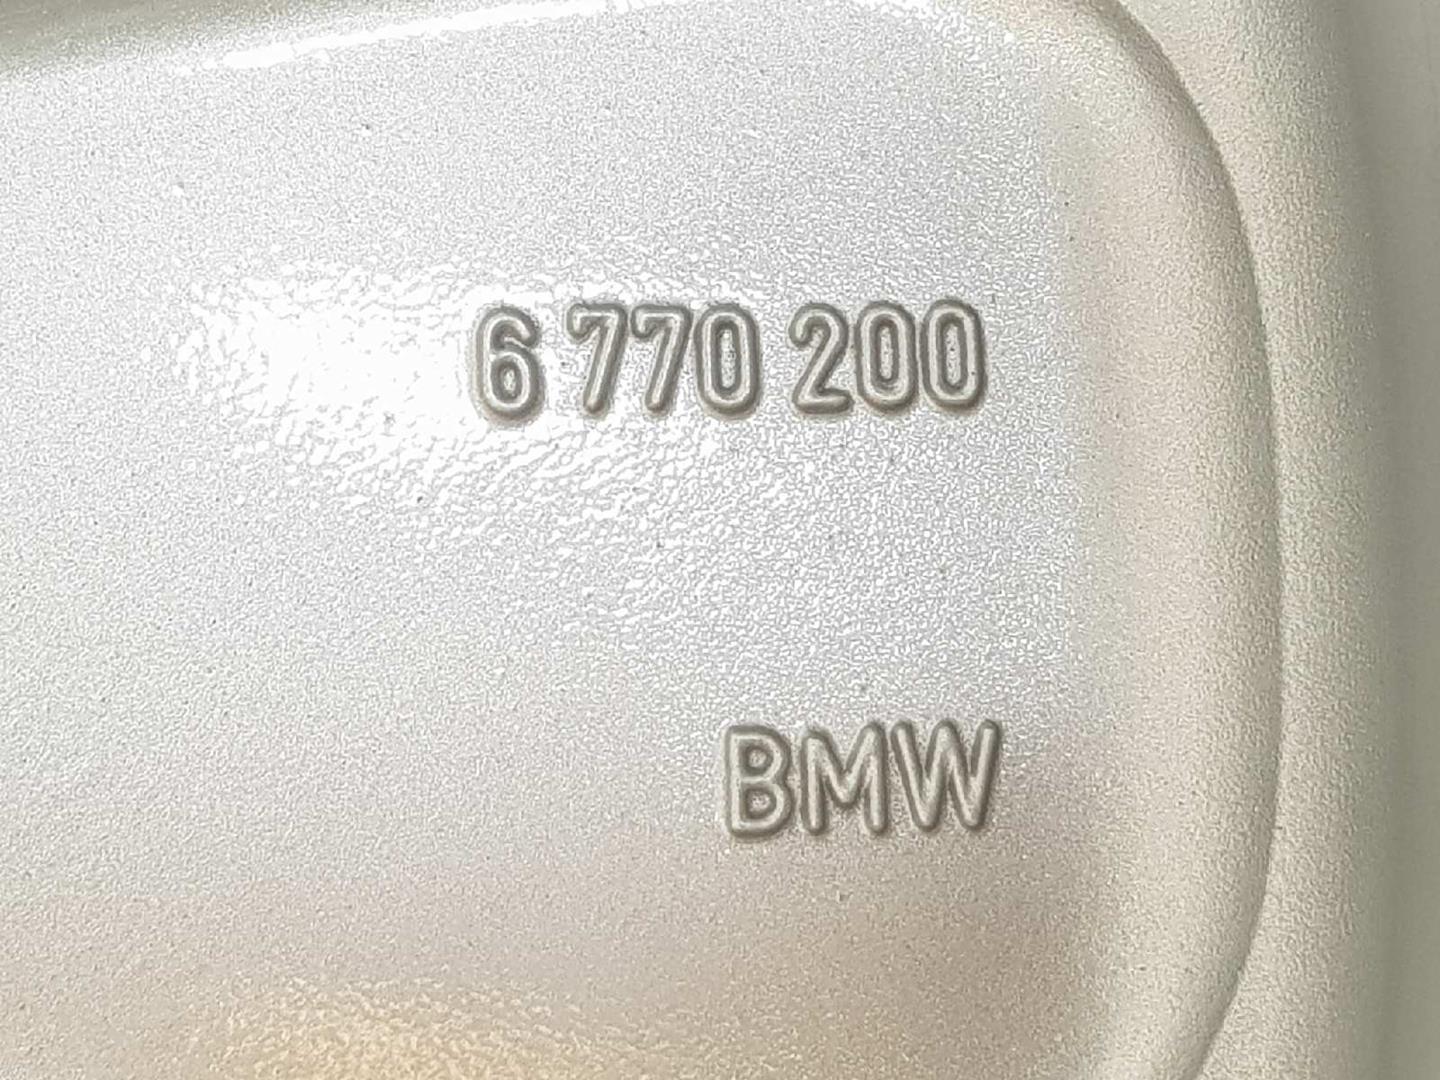 BMW X6 E71/E72 (2008-2012) Шина 6770200, 36116770200 19750106